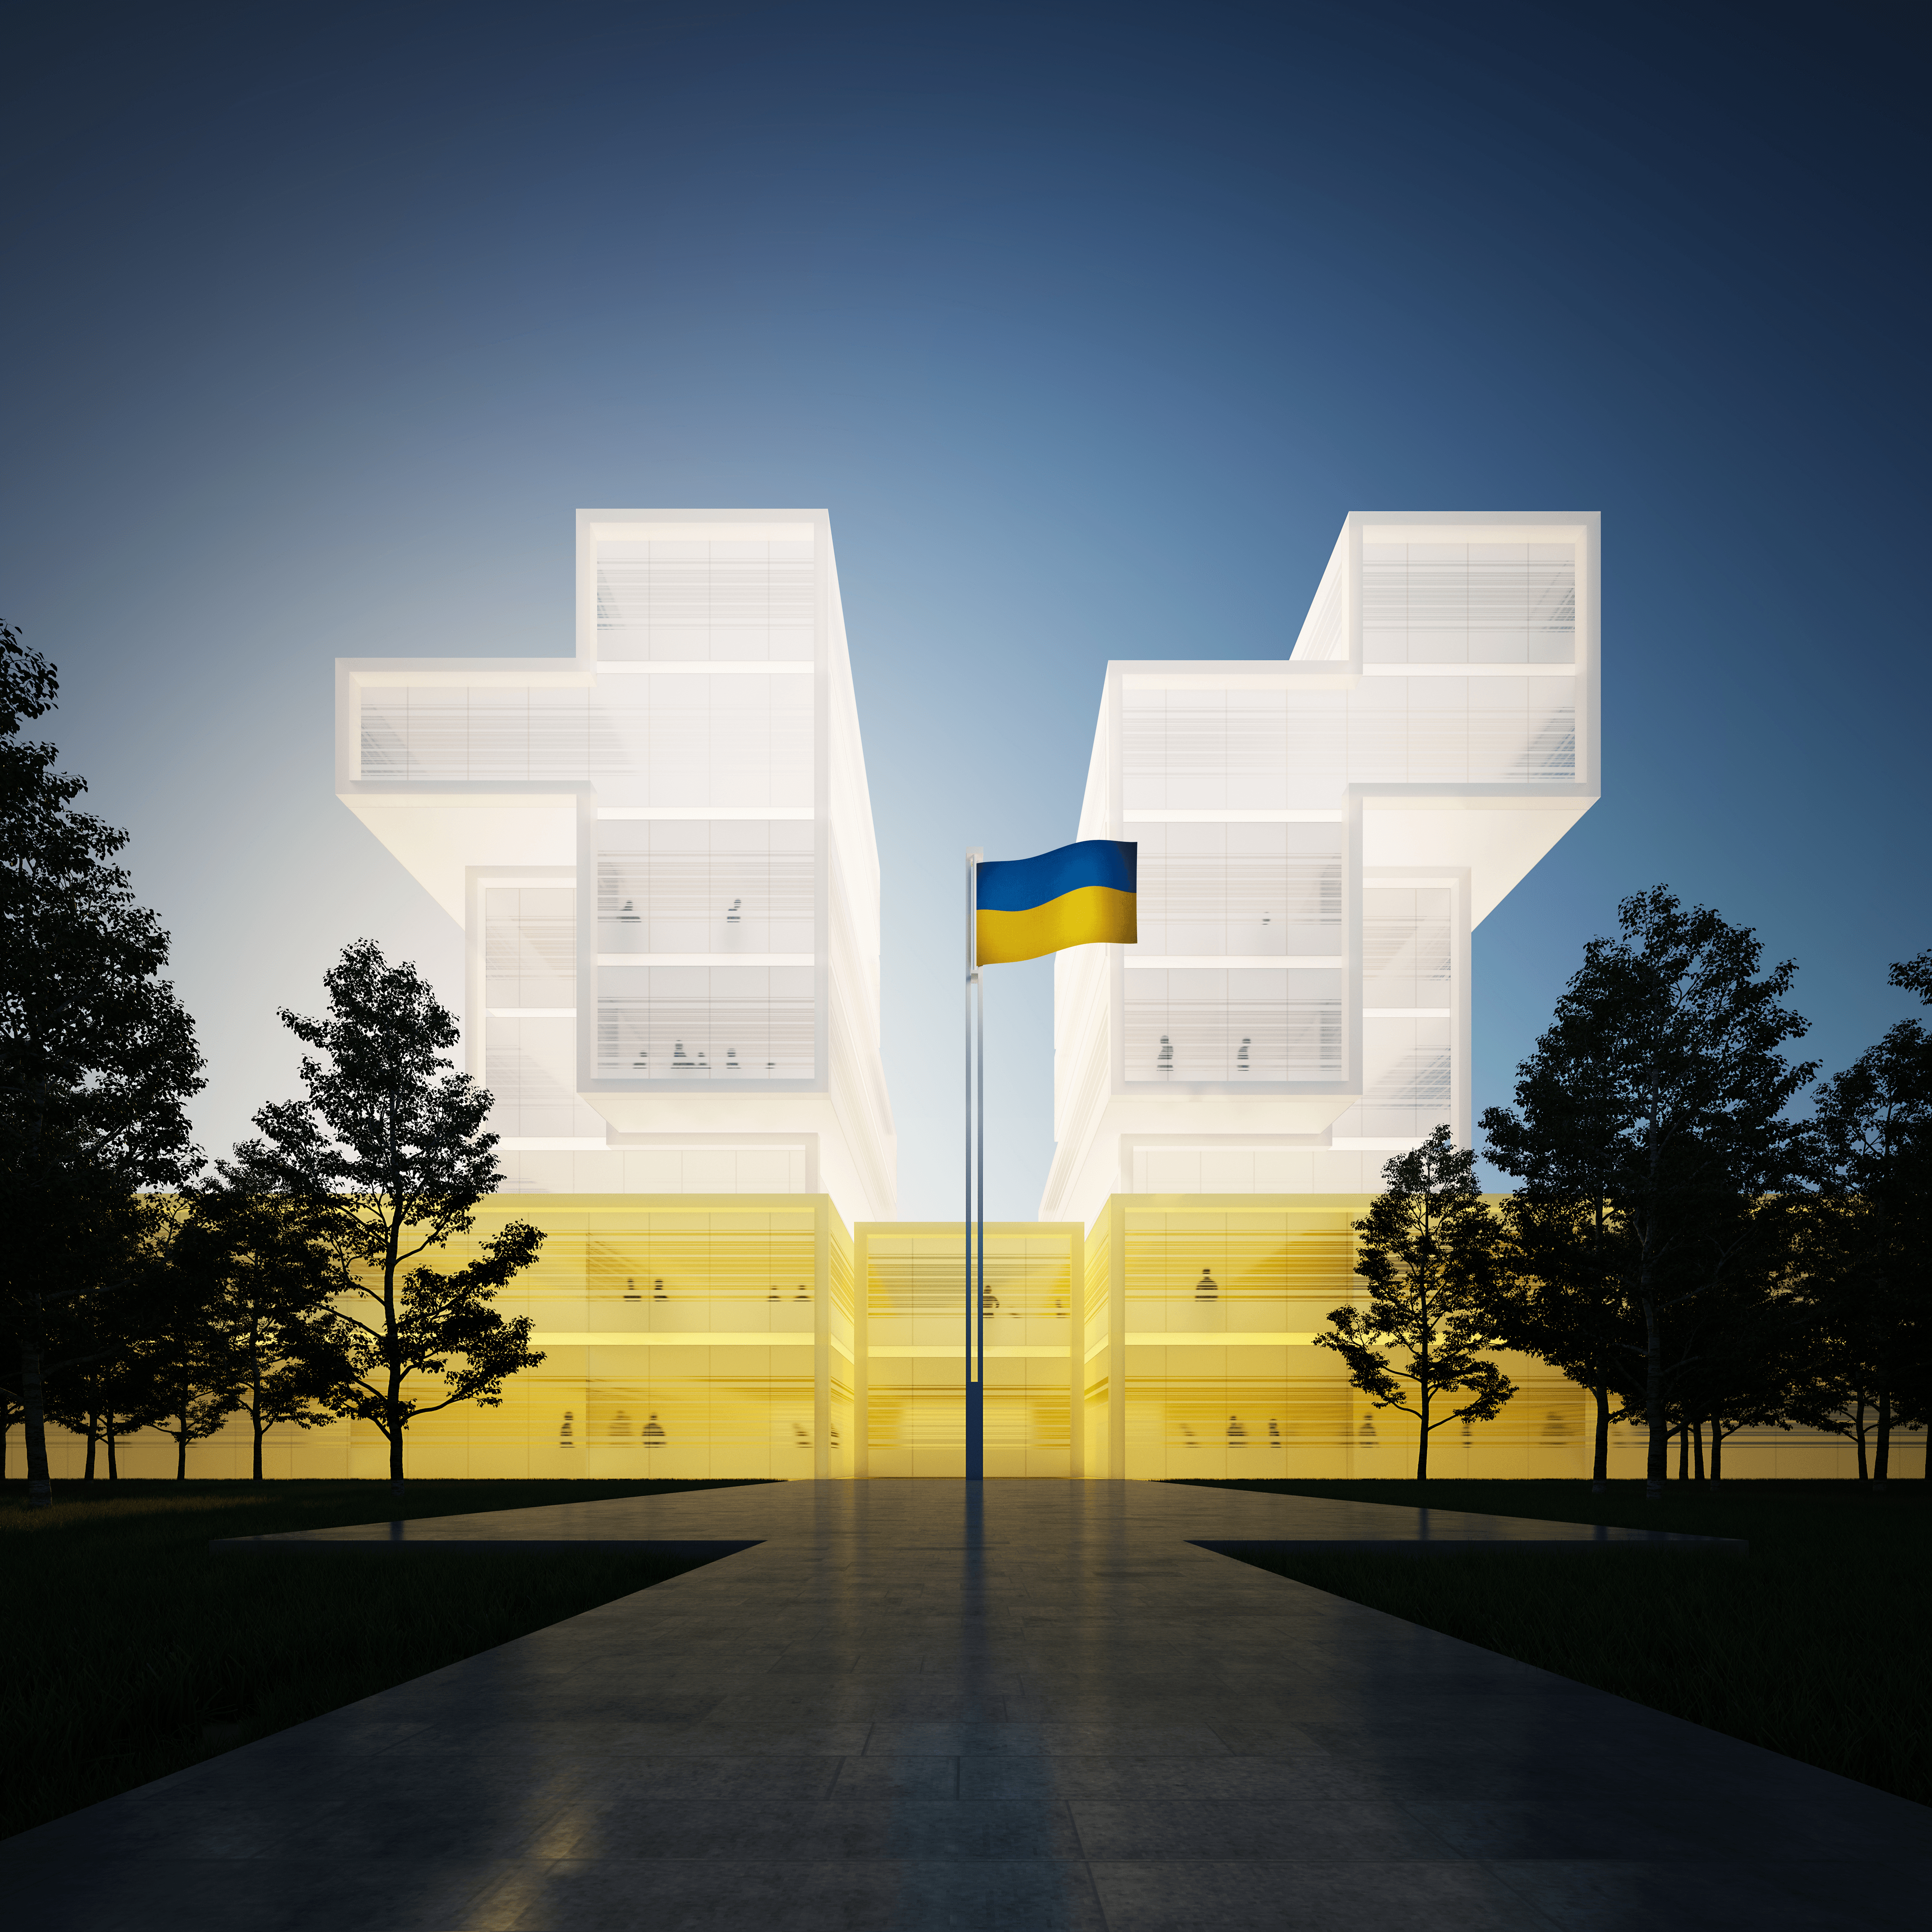 The virtual House of Ukraine